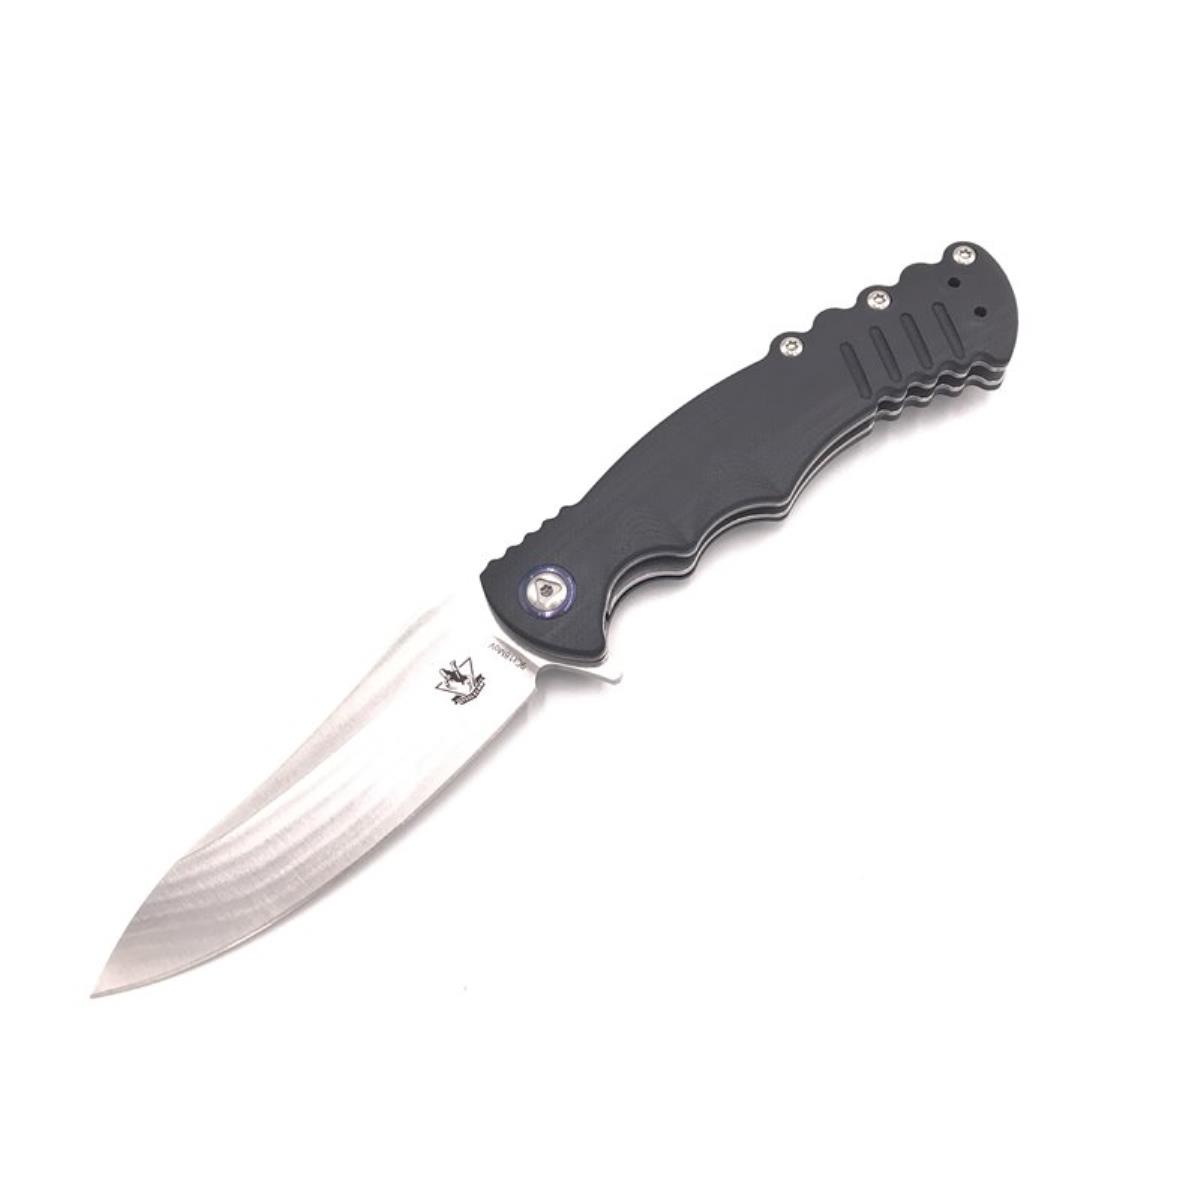 Нож 5072-1 Steelclaw нож пчак шархон текстолит олово чирчик 11 12 см